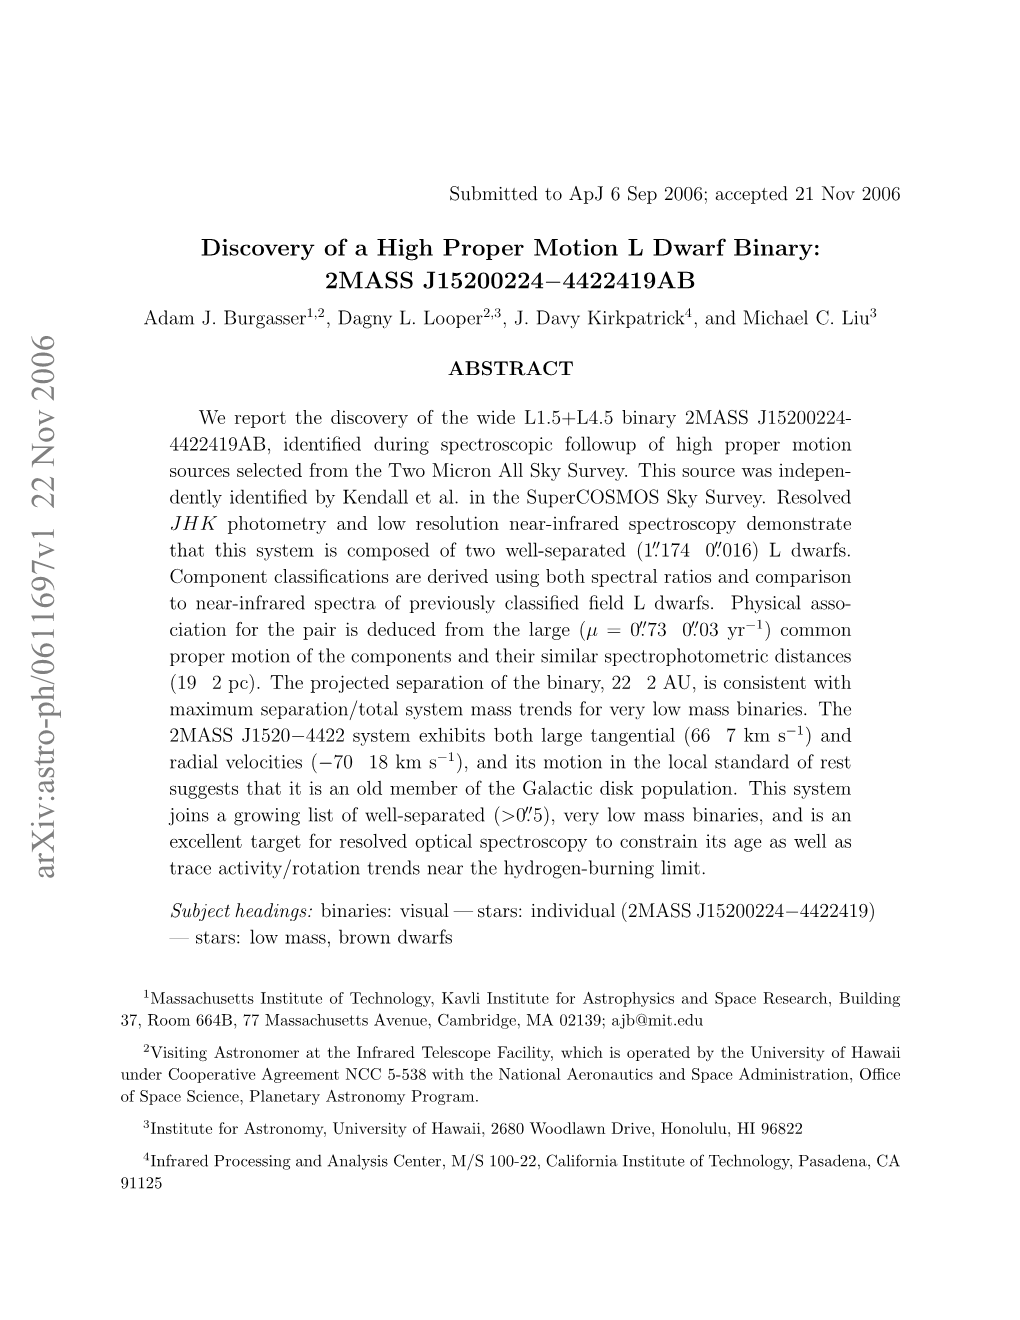 Discovery of a High Proper Motion L Dwarf Binary: 2MASS J15200224